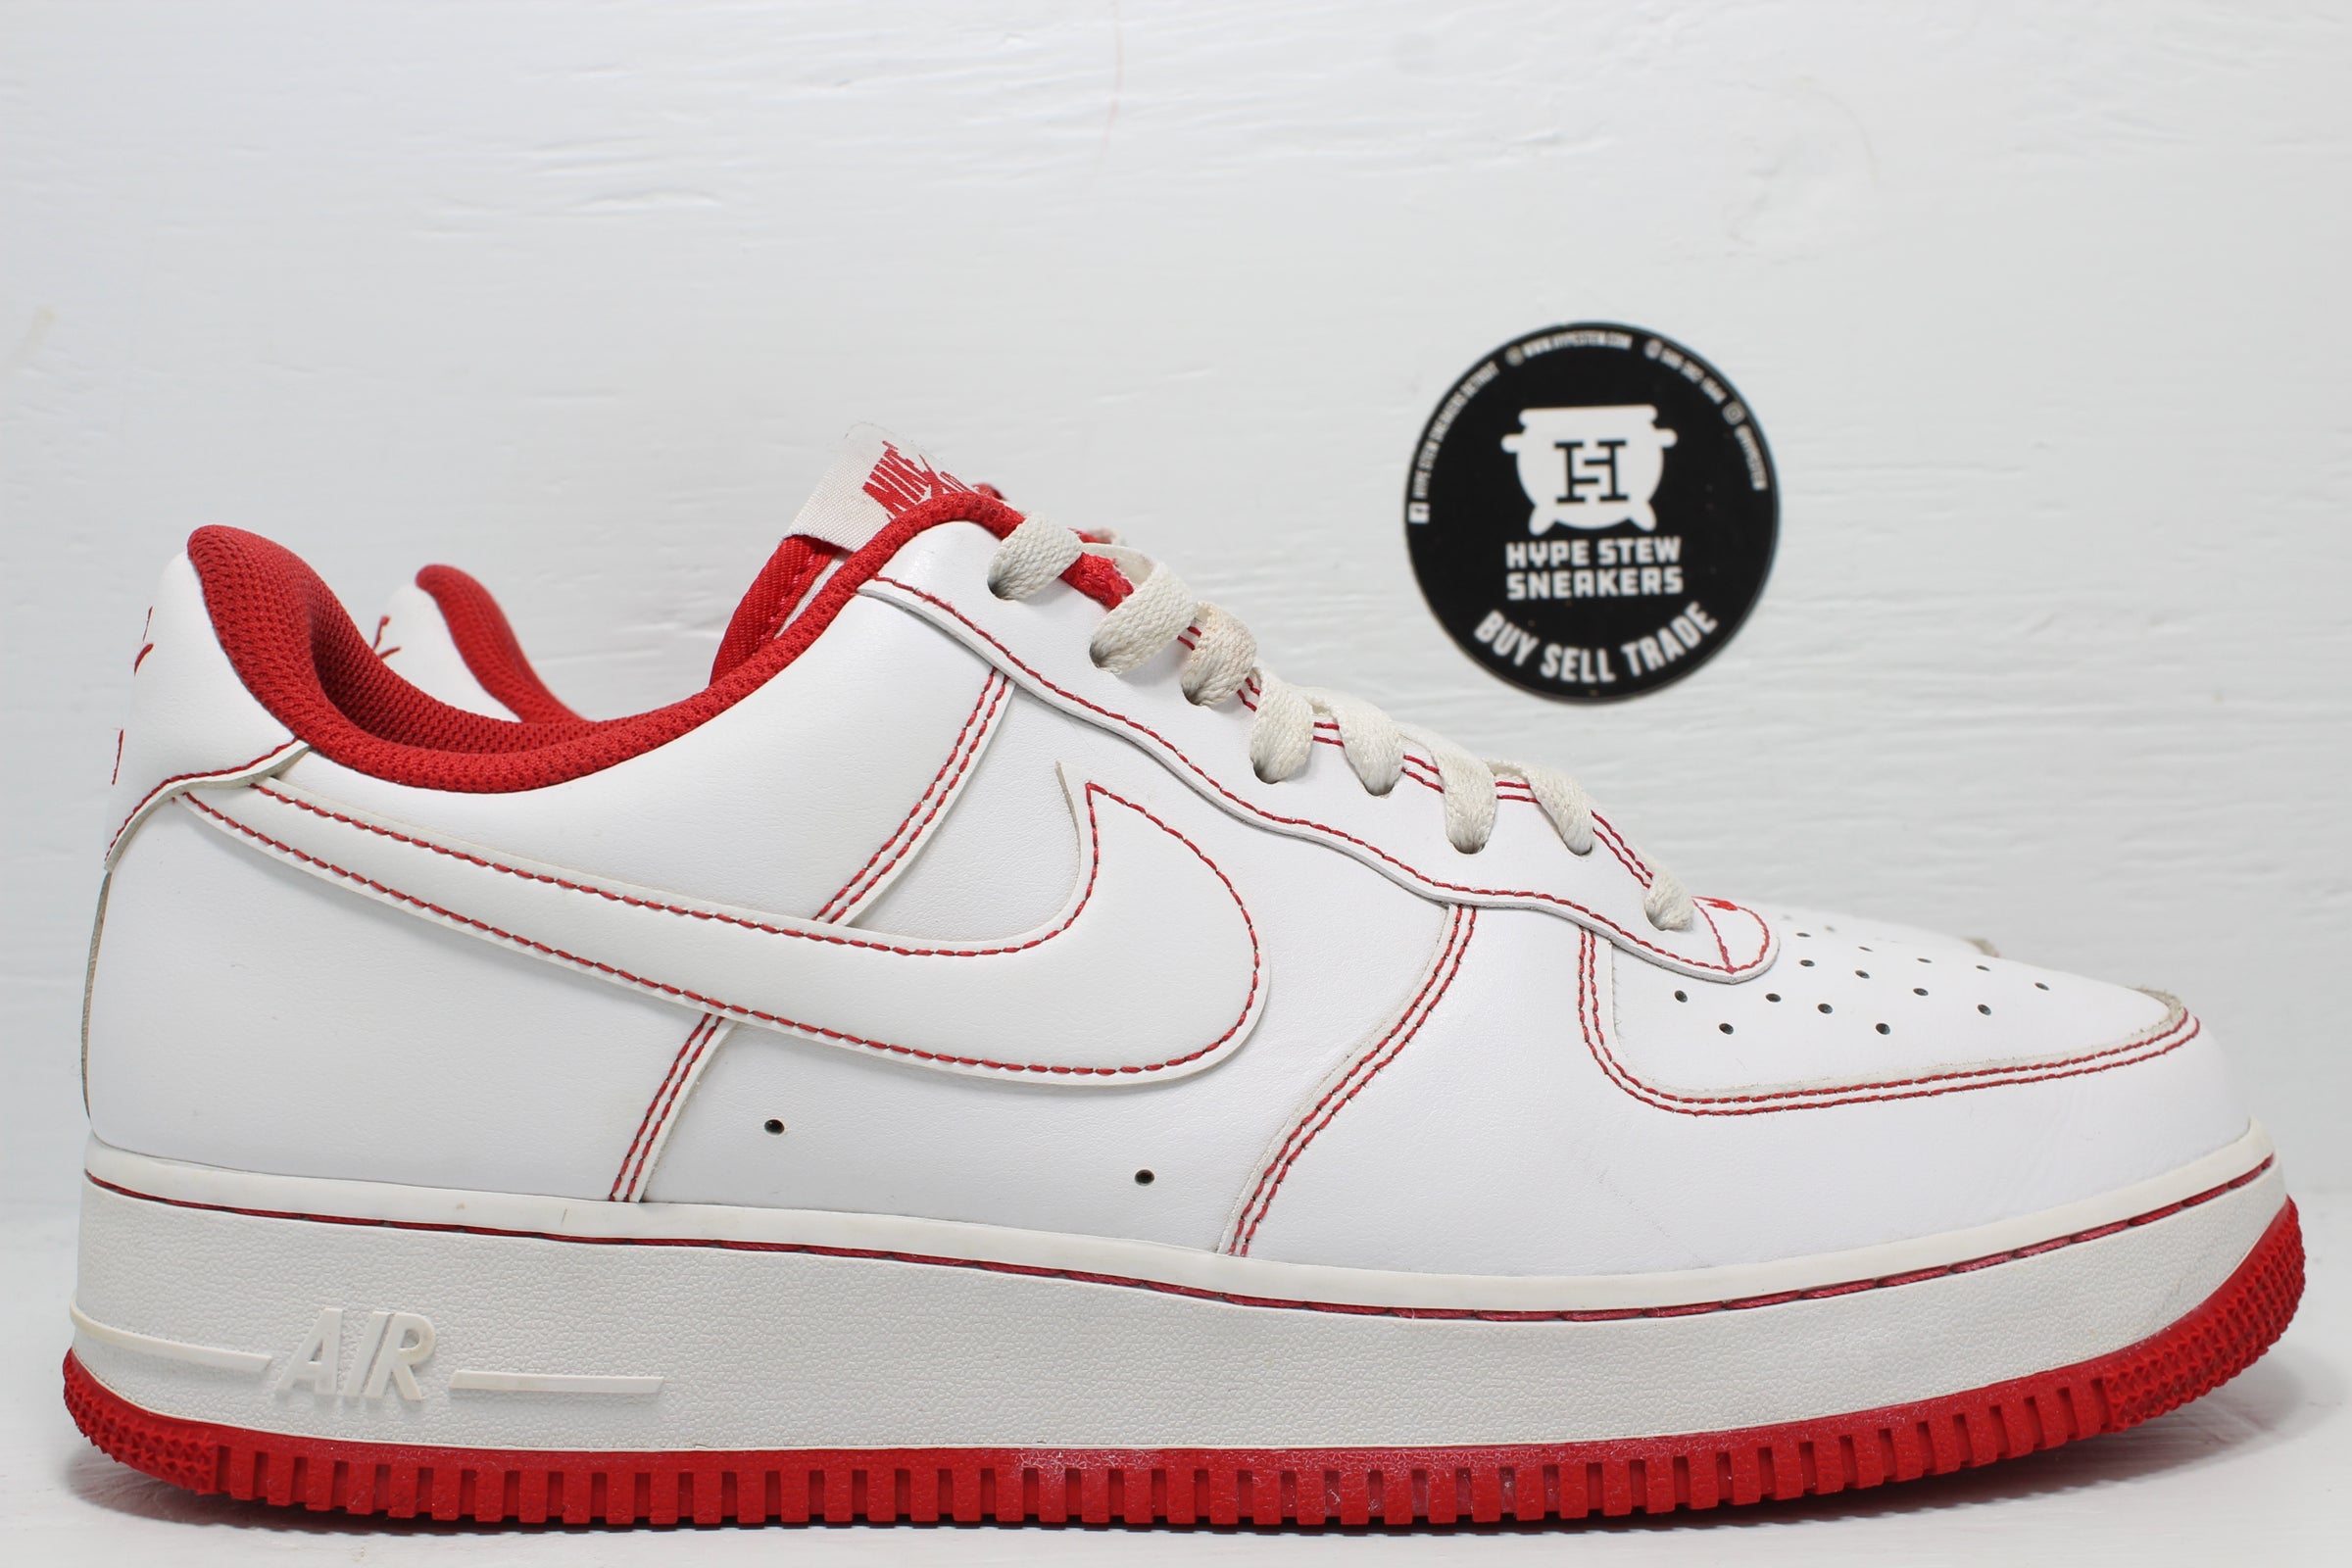 suelo Procesando Santuario Nike Air Force 1 Low '07 White University Red | Hype Stew Sneakers Detroit